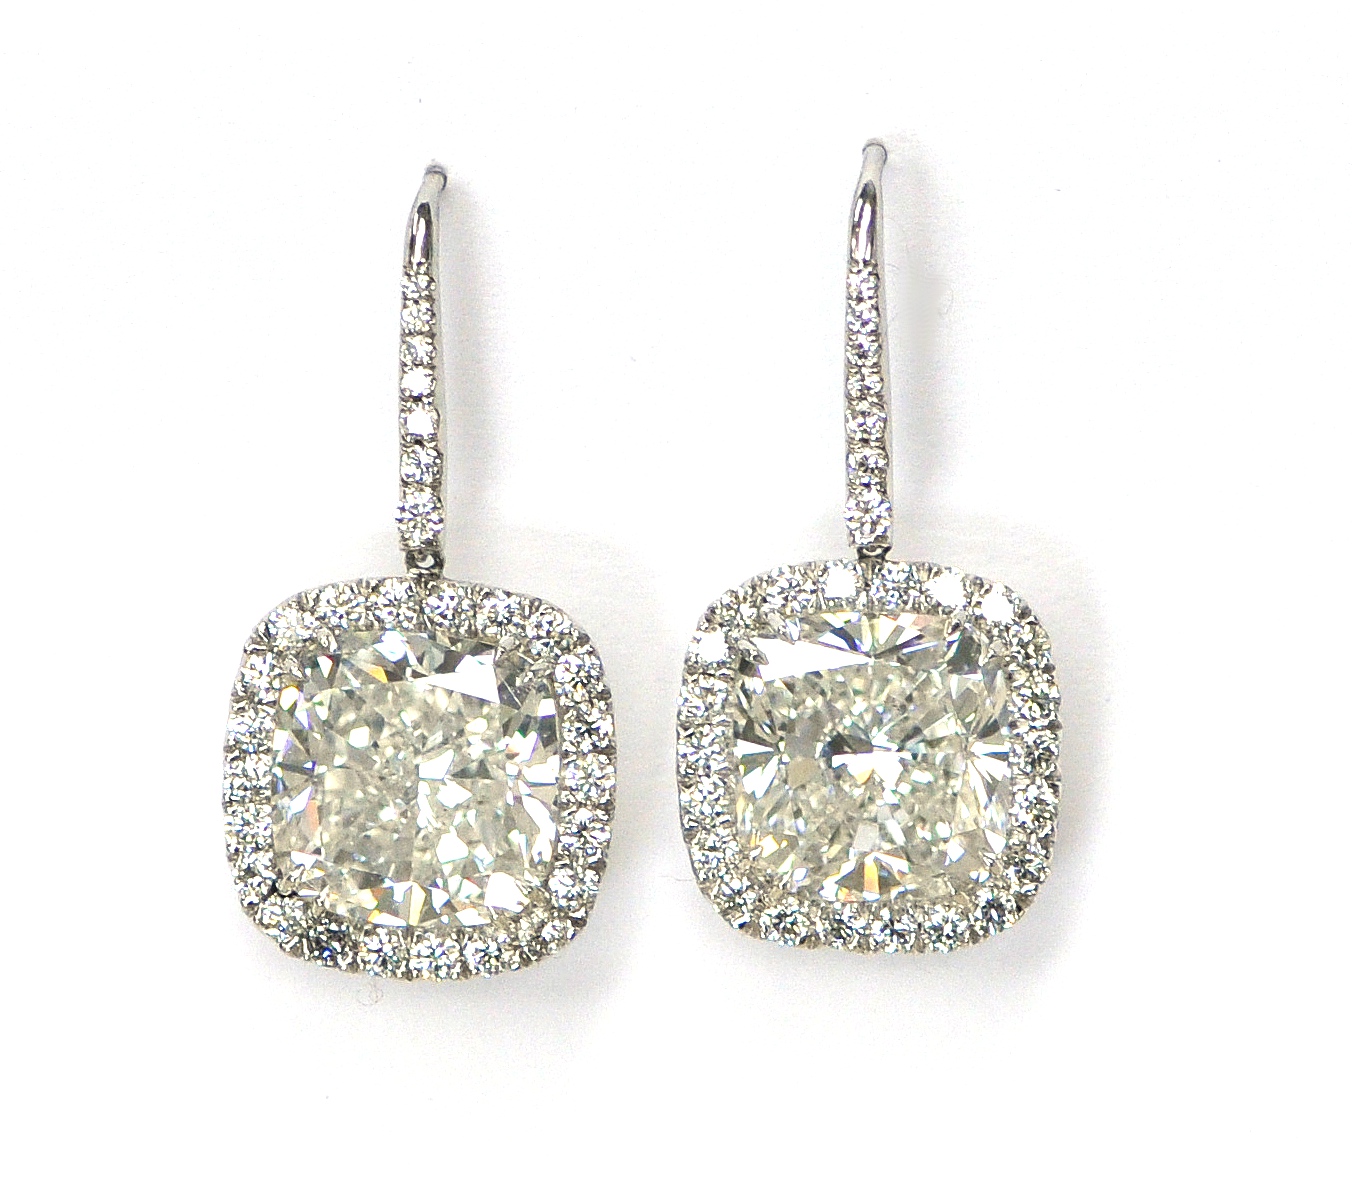 20ct Diamond Earrings